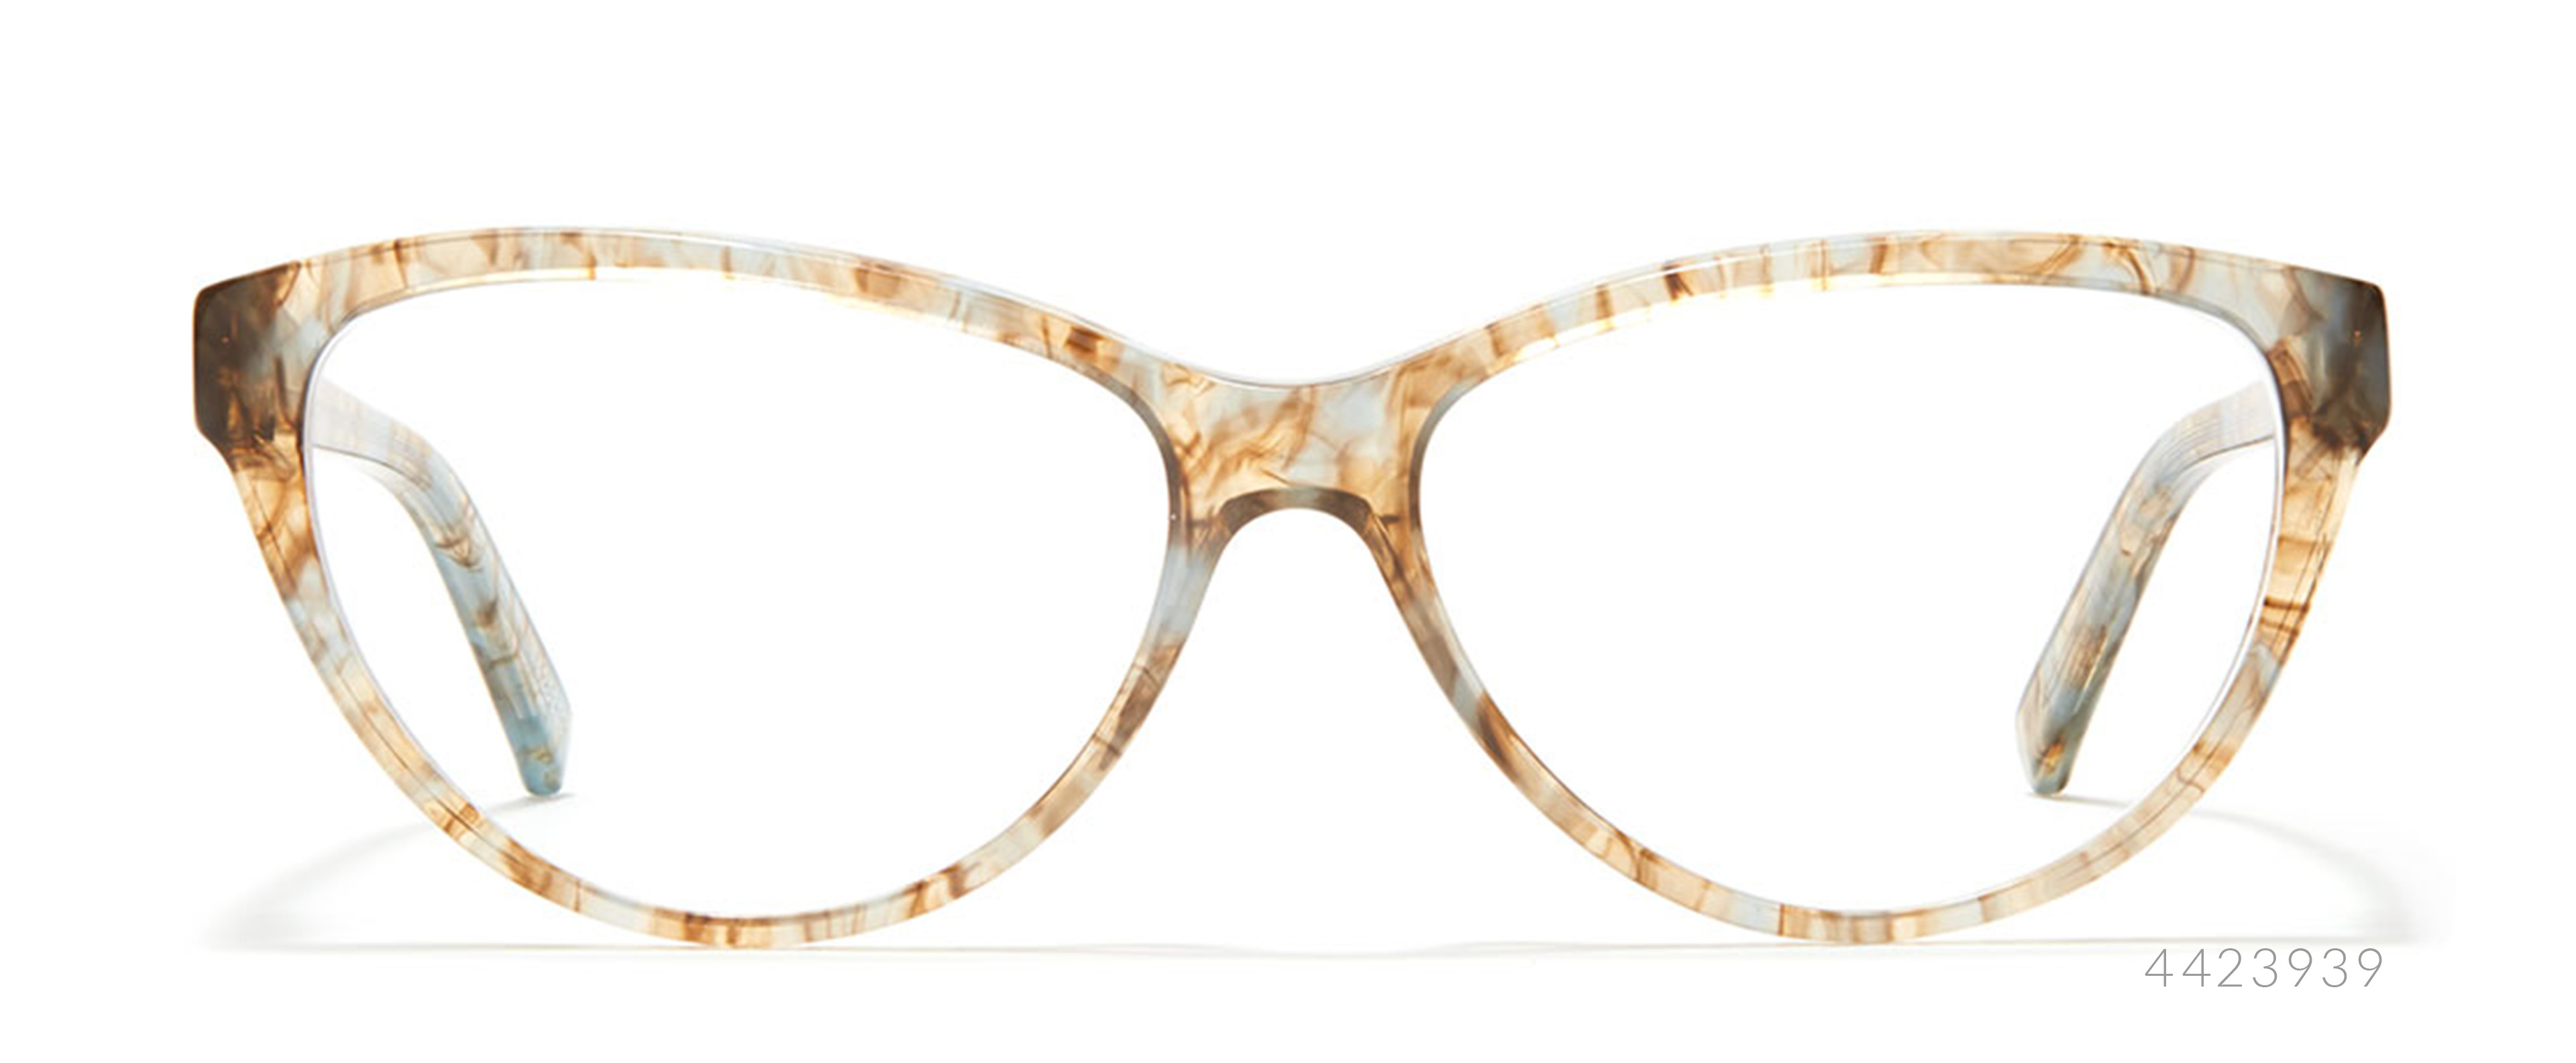 speckled cat eye glasses